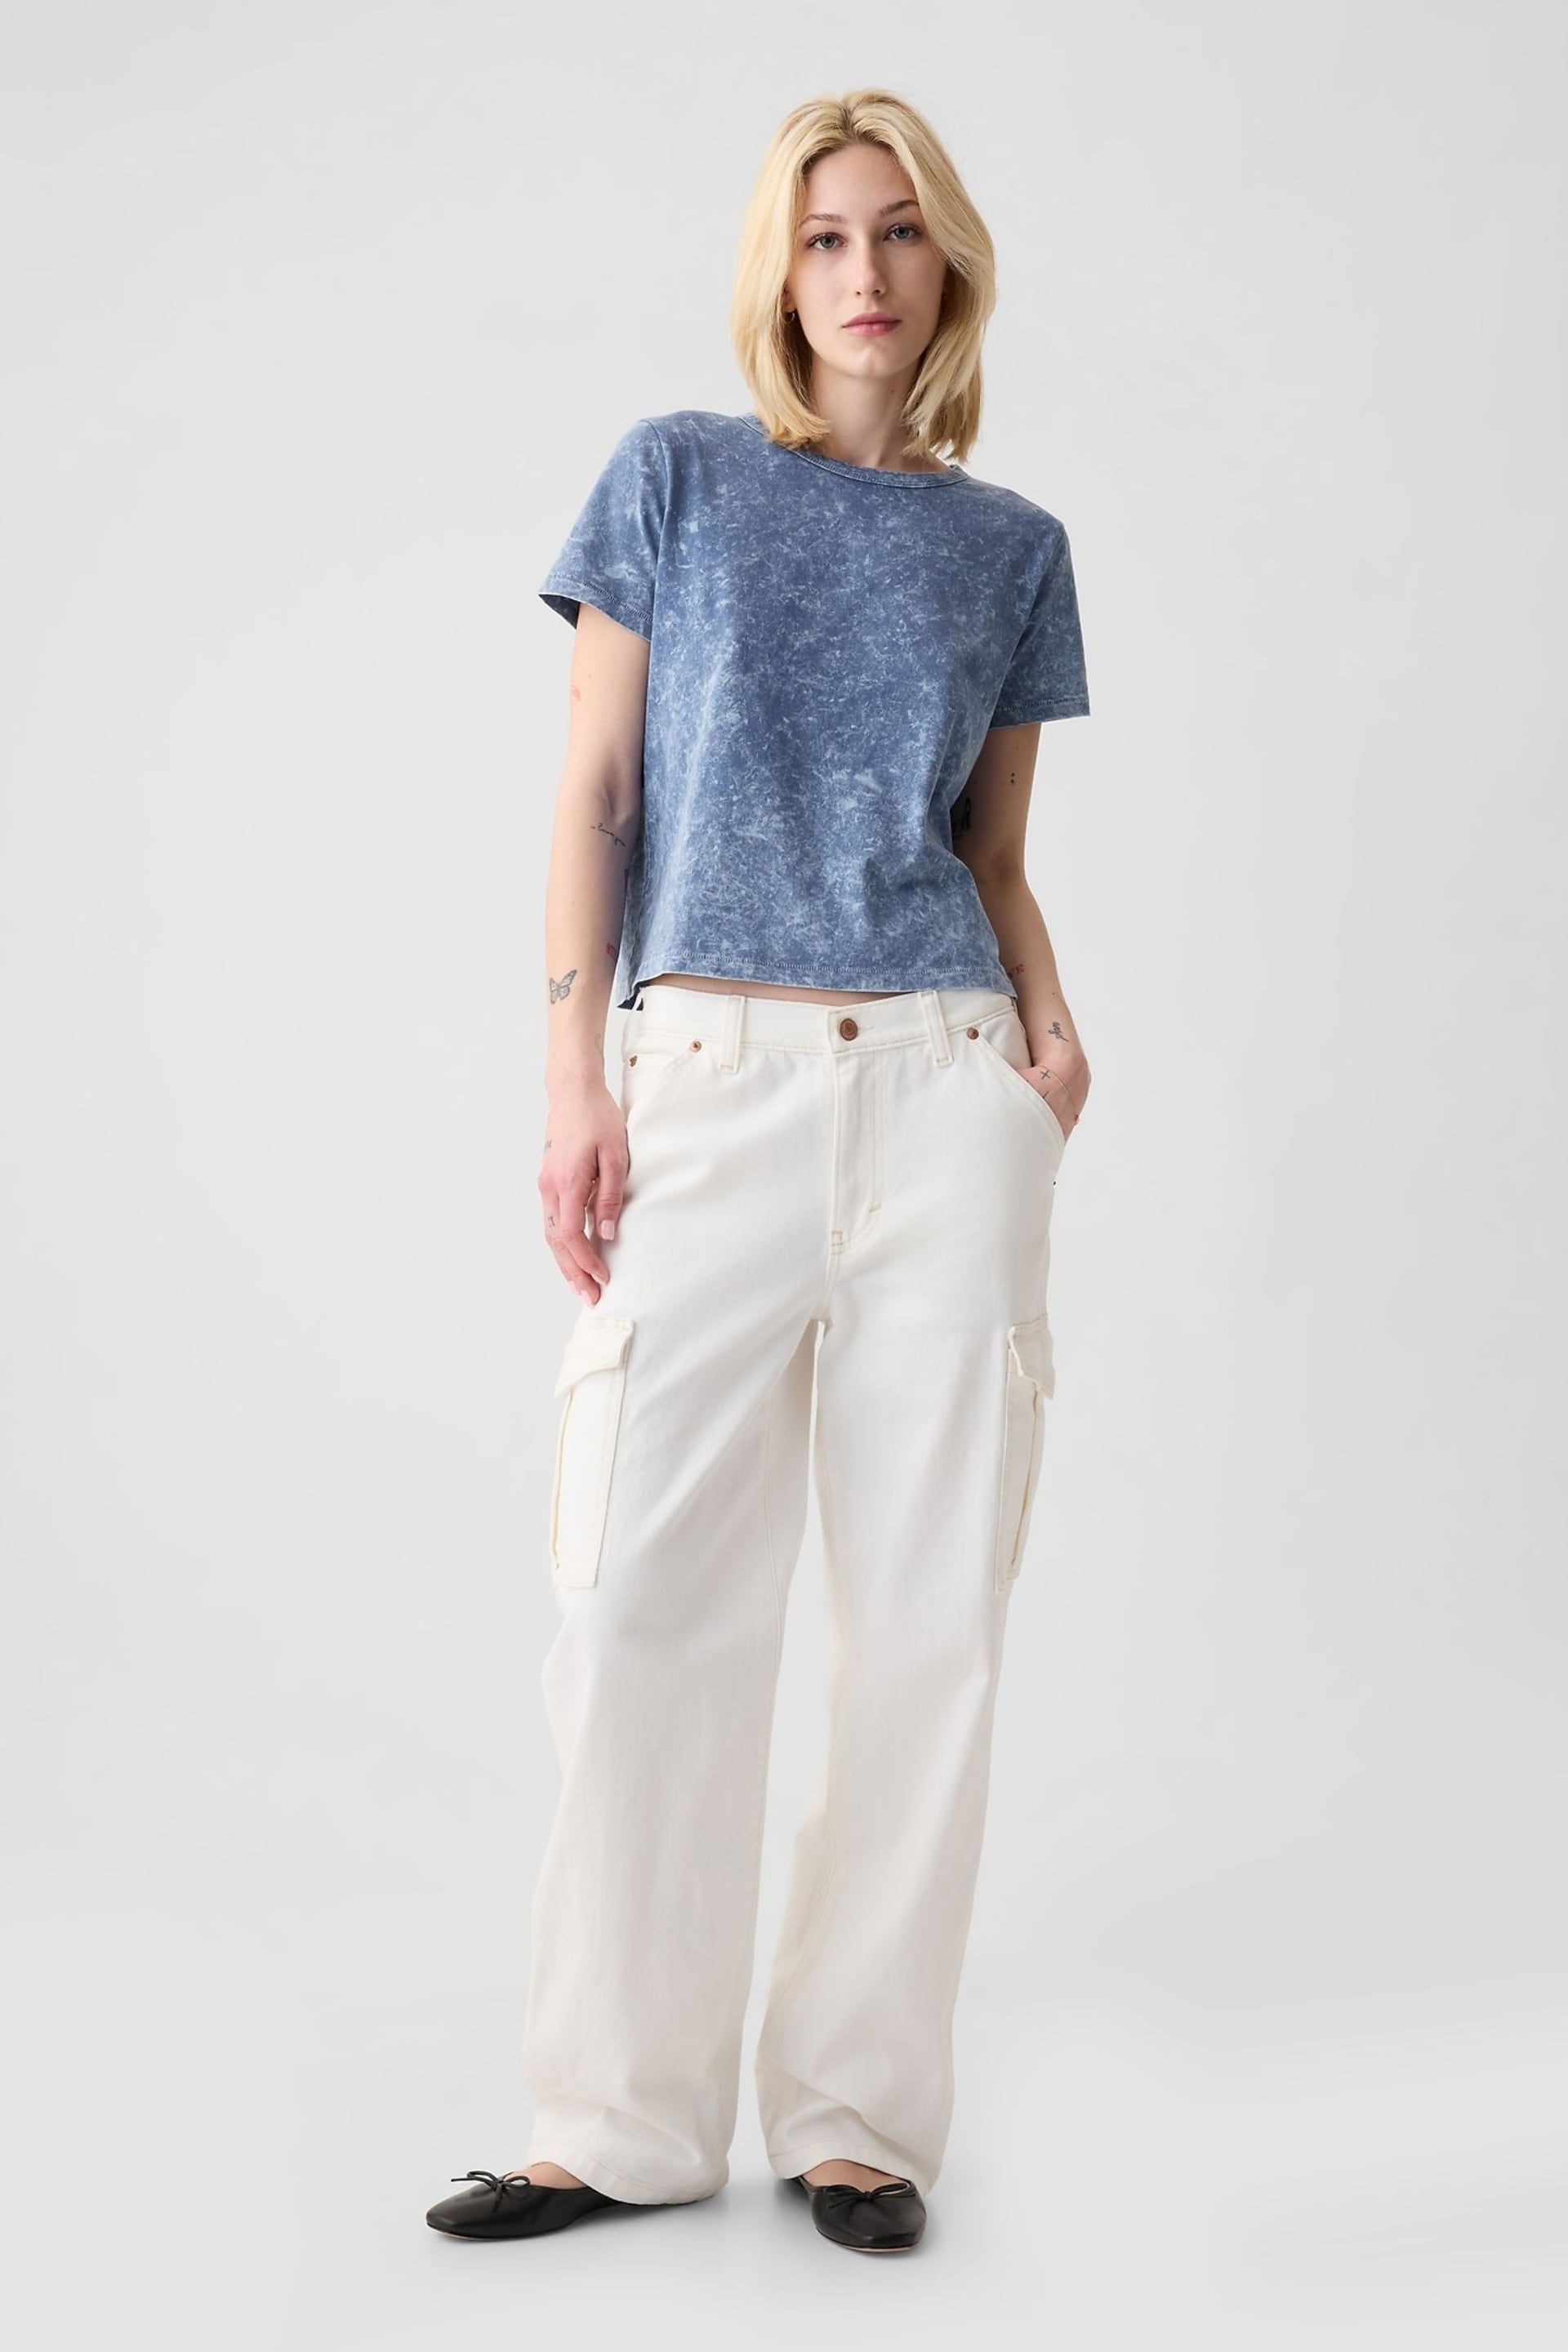 Gap Blue Organic Cotton Vintage Short Sleeve T-Shirt - Image 3 of 4